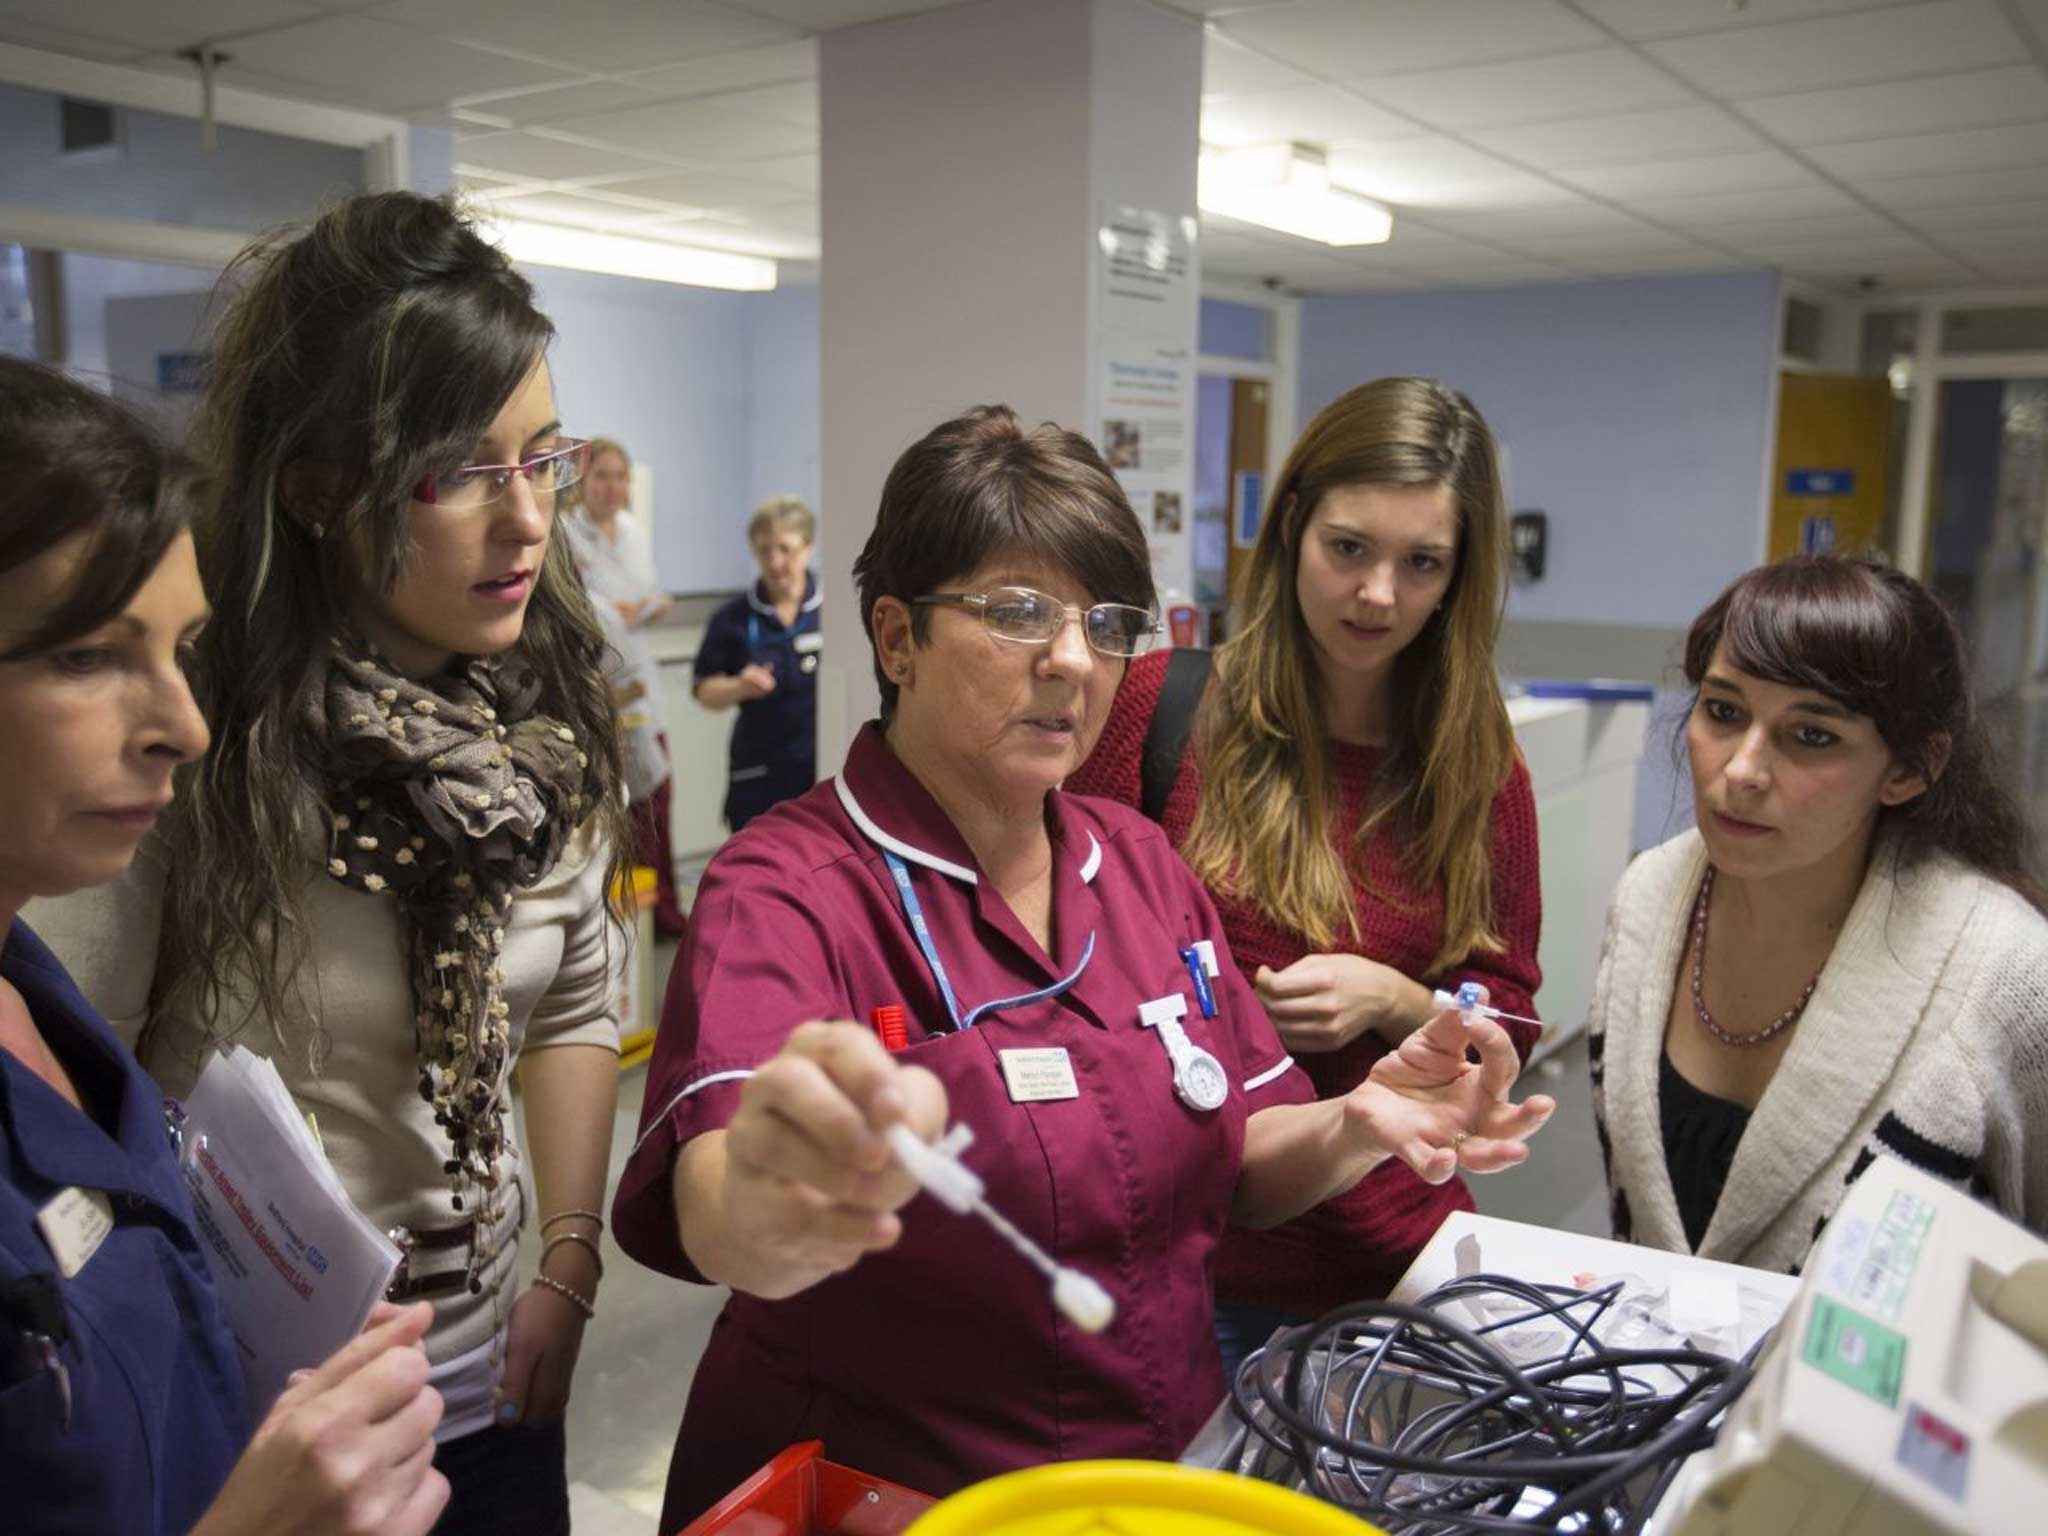 New recruits: Bedford Hospital ward sister Marilyn Flanagan instructs nurses from Spain